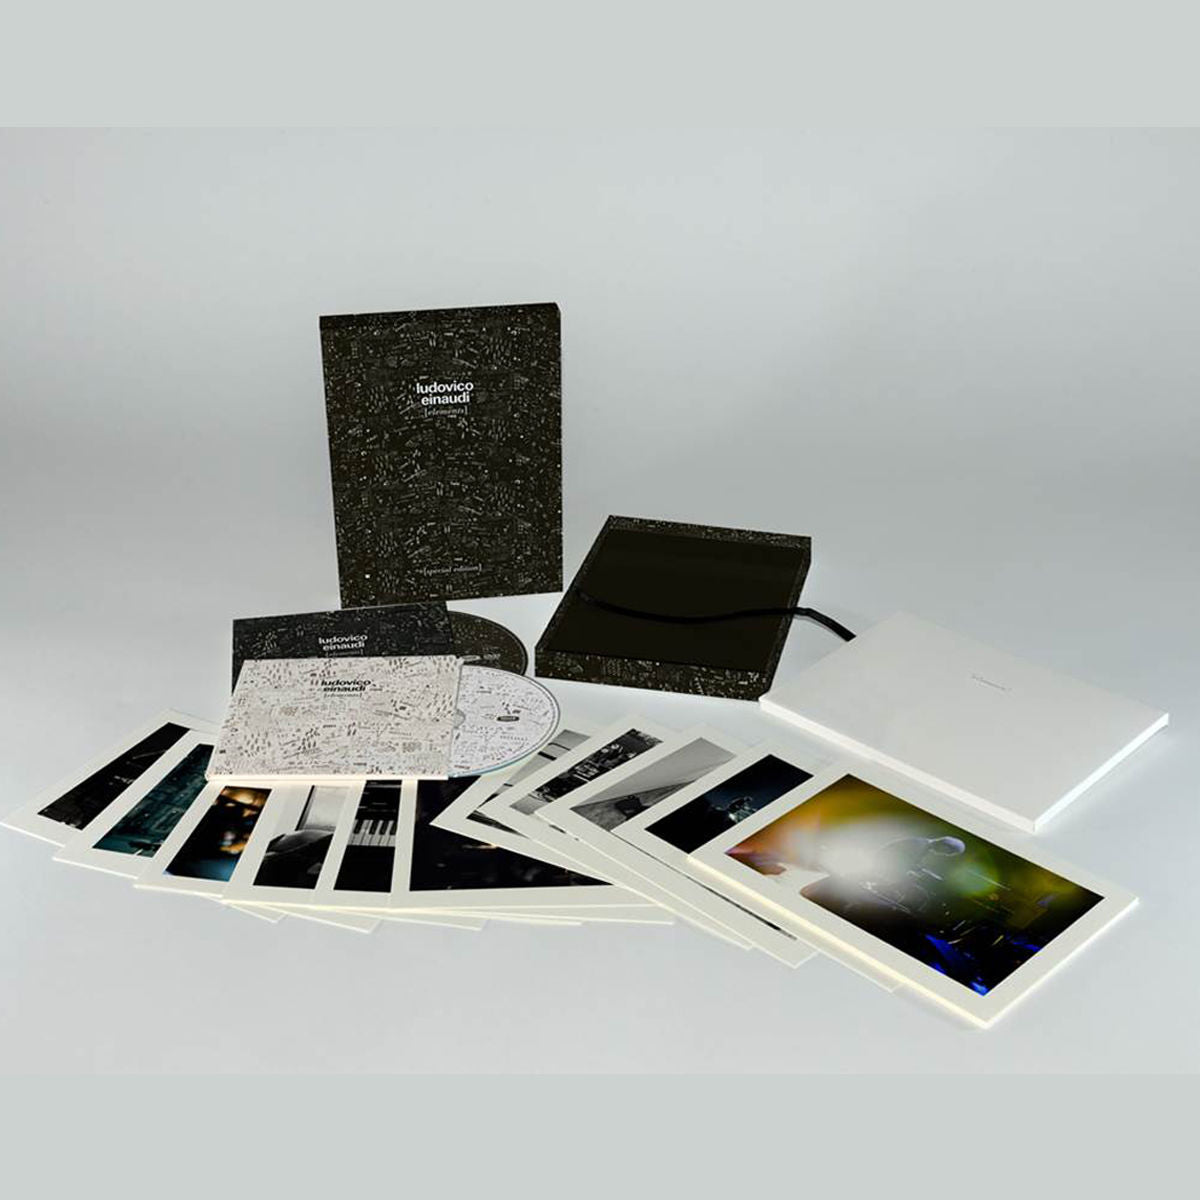 Universal Ludovico Einaudi - Seven Days Walking Coffret Deluxe 2LP+7CD